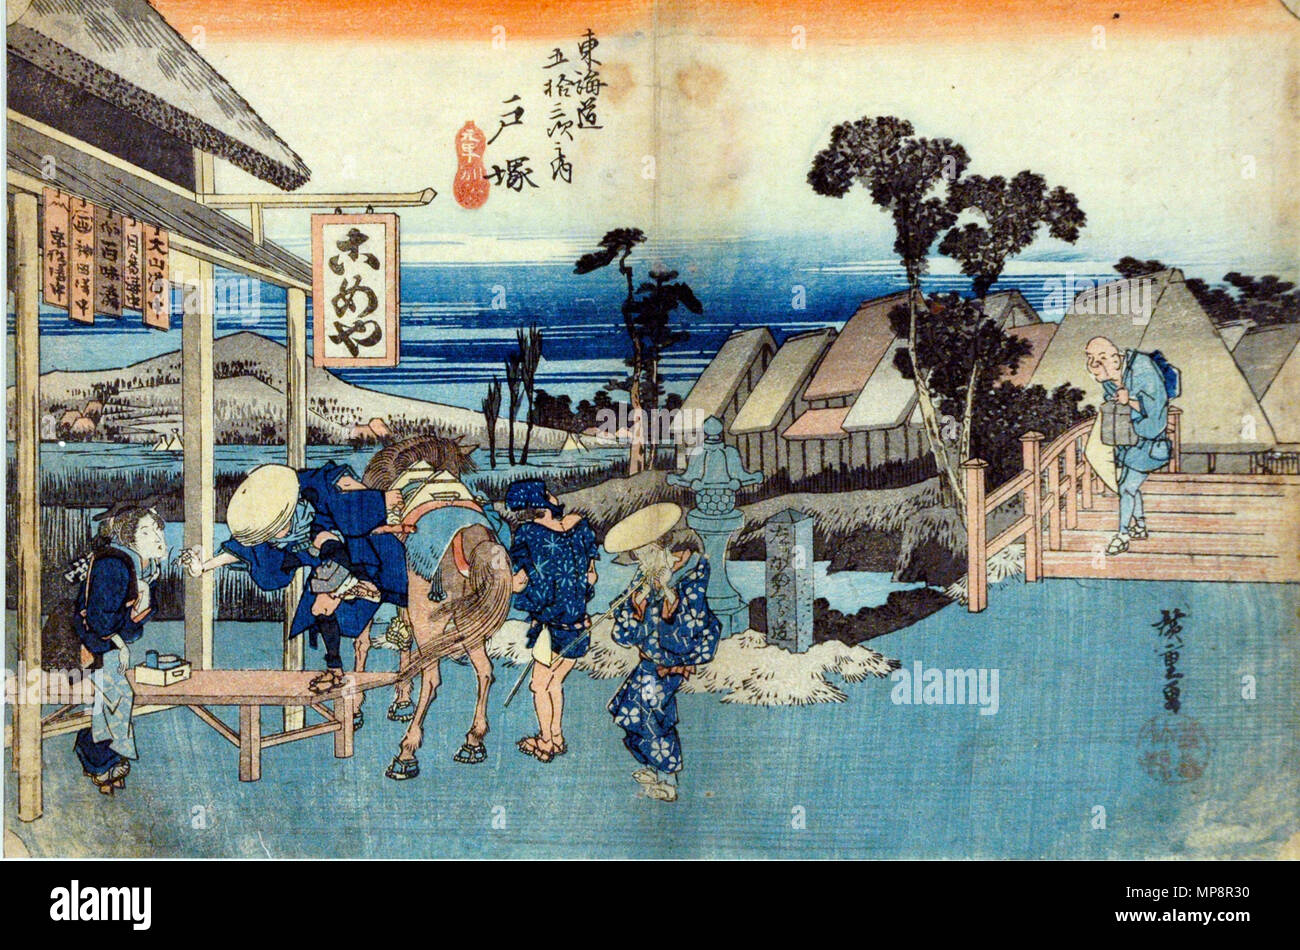 . English: Accession Number: 1957.226 Display Artist: Utagawa Hiroshige Display Title: Totsuka: Motomachi Detour Translation(s): Totsuka: Motomachi wakaremichi Series Title: 'The Fifty-three Stations of the Tokaido Road, known as the ''Hoeido Tokaido''' Suite Name: Tokaido gojusan tsugi no uchi Creation Date: ca. 1832-1833 Medium: Woodblock Height: 9 1/16 in. Width: 13 3/4 in. Display Dimensions: 9 1/16 in. x 13 3/4 in. (23.02 cm x 34.93 cm) Publisher: Tsuruya Kiemon and Takenouchi Magohachi Credit Line: Bequest of Mrs. Cora Timken Burnett Label Copy: 'Totsuka Station No. 6 (Series - 53 Statio Stock Photo